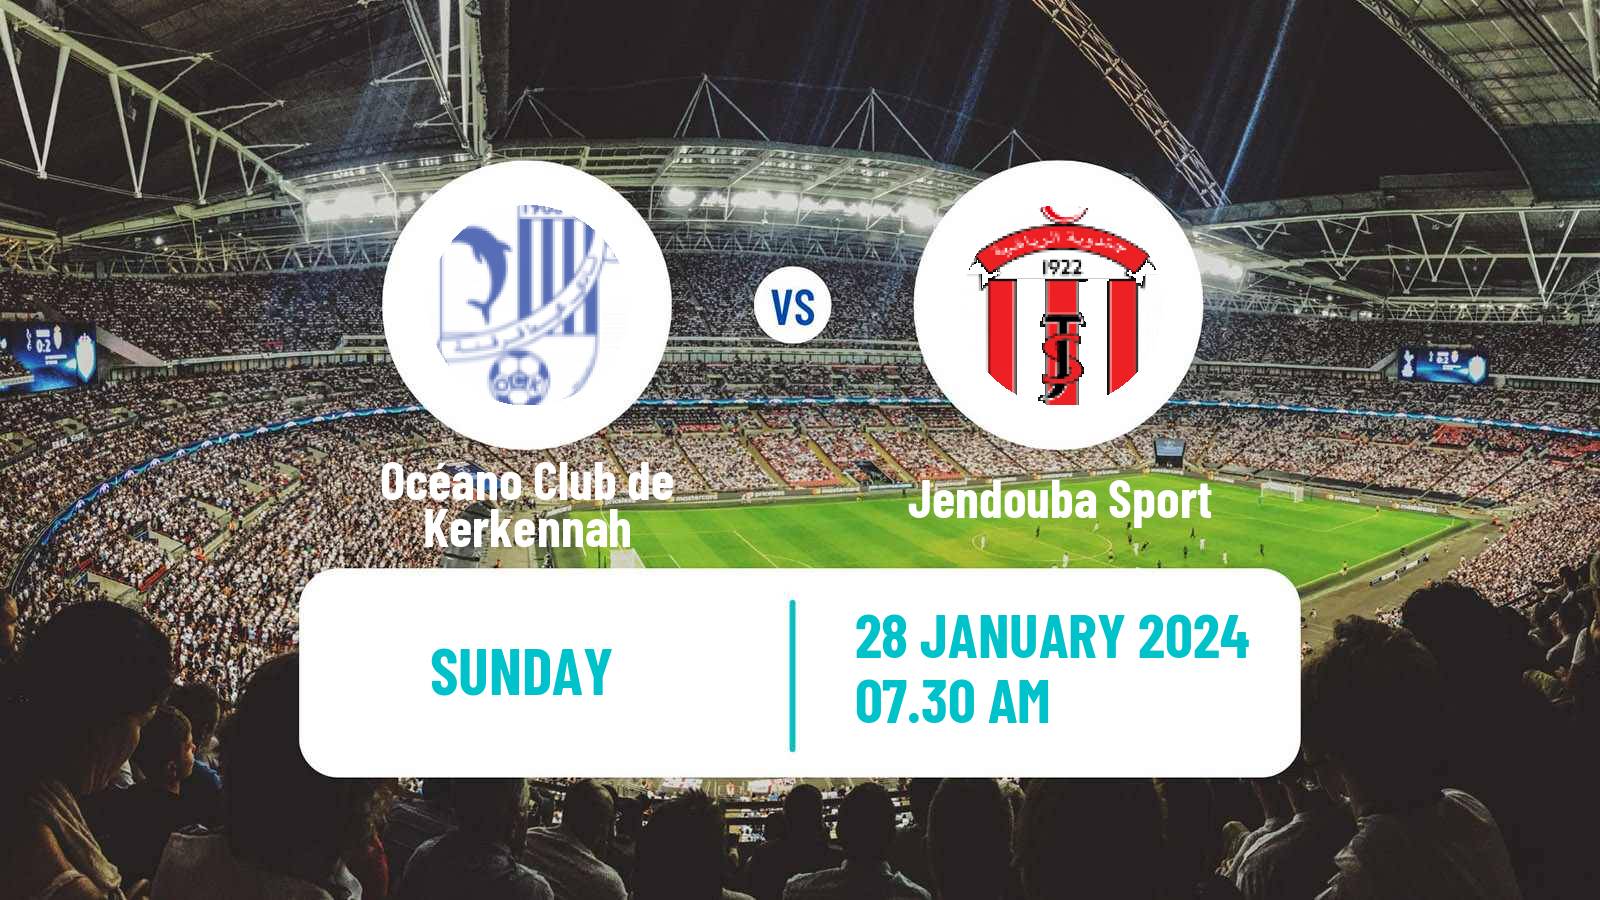 Soccer Tunisian Cup Océano Club de Kerkennah - Jendouba Sport